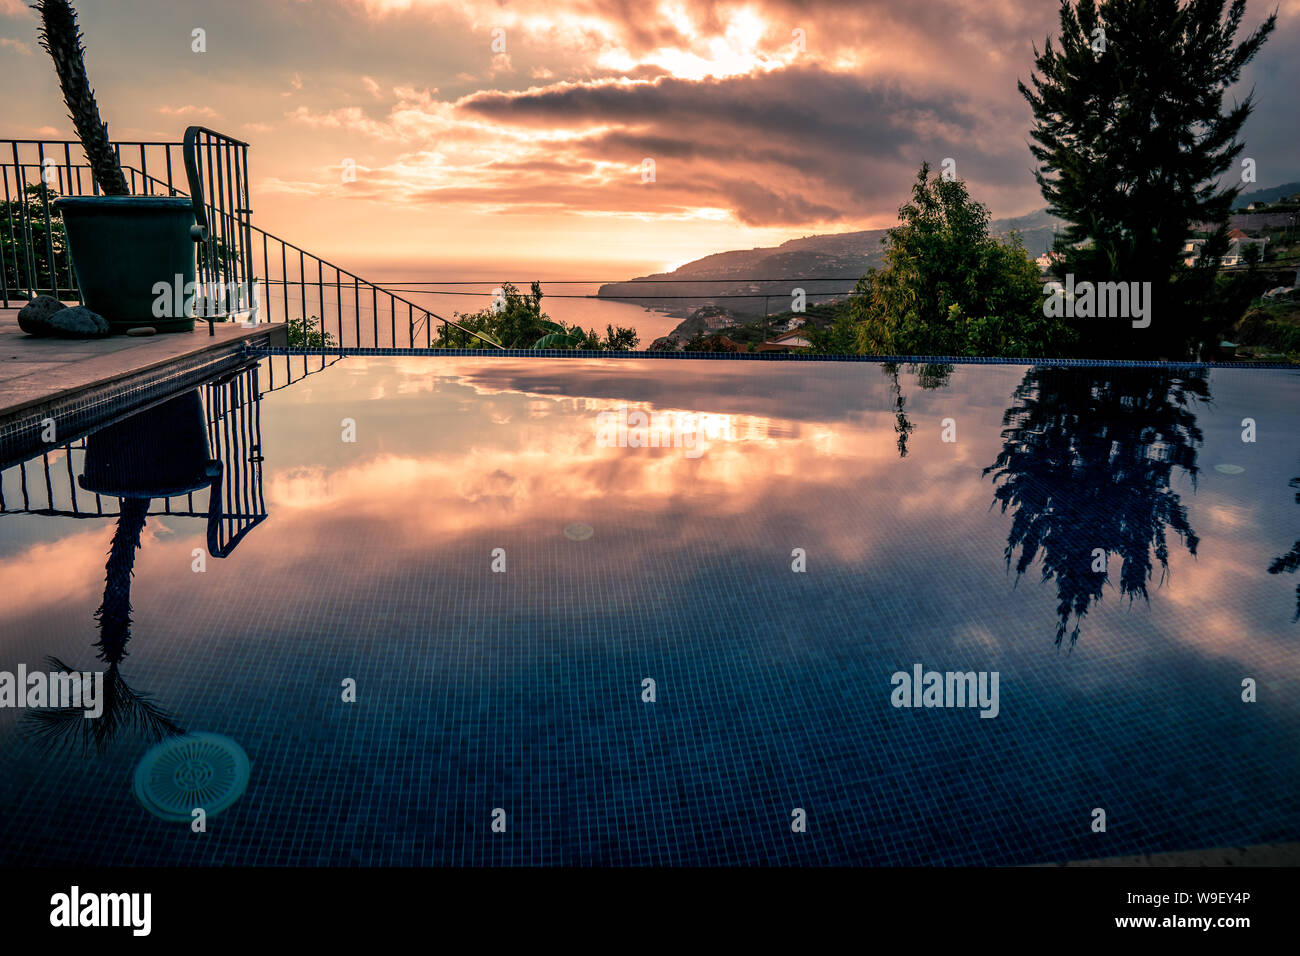 Sunset water reflections at piscine à débordement, moody tones Banque D'Images